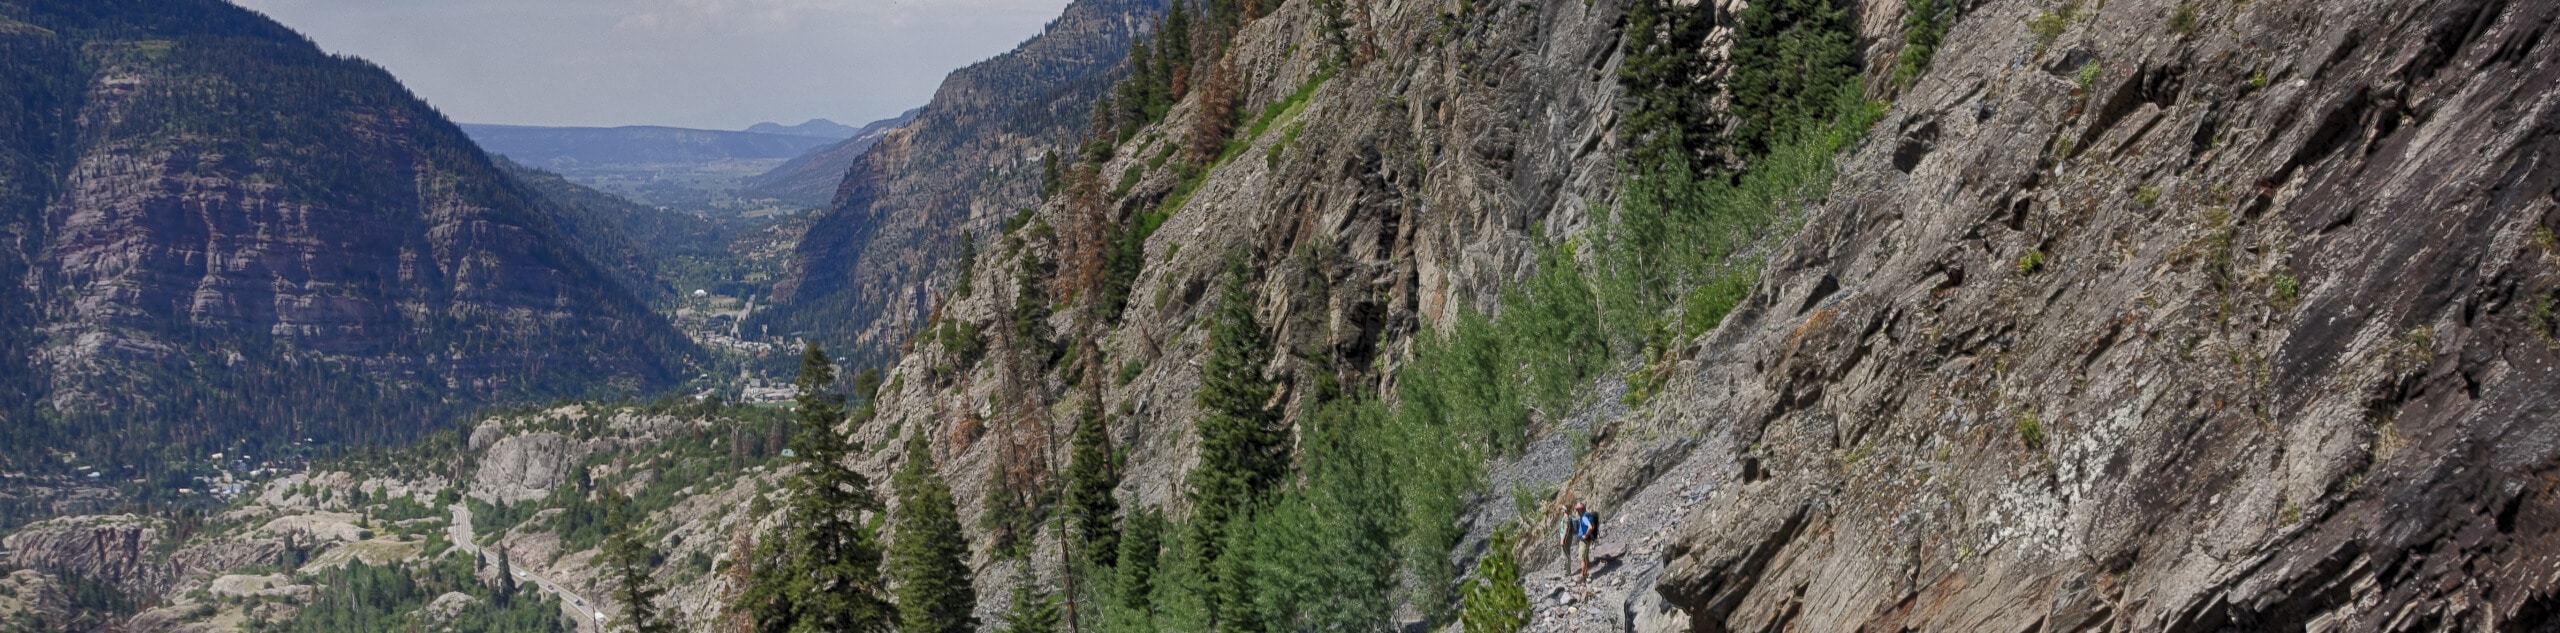 Bear Canyon Trail to Bear Peak West Ridge